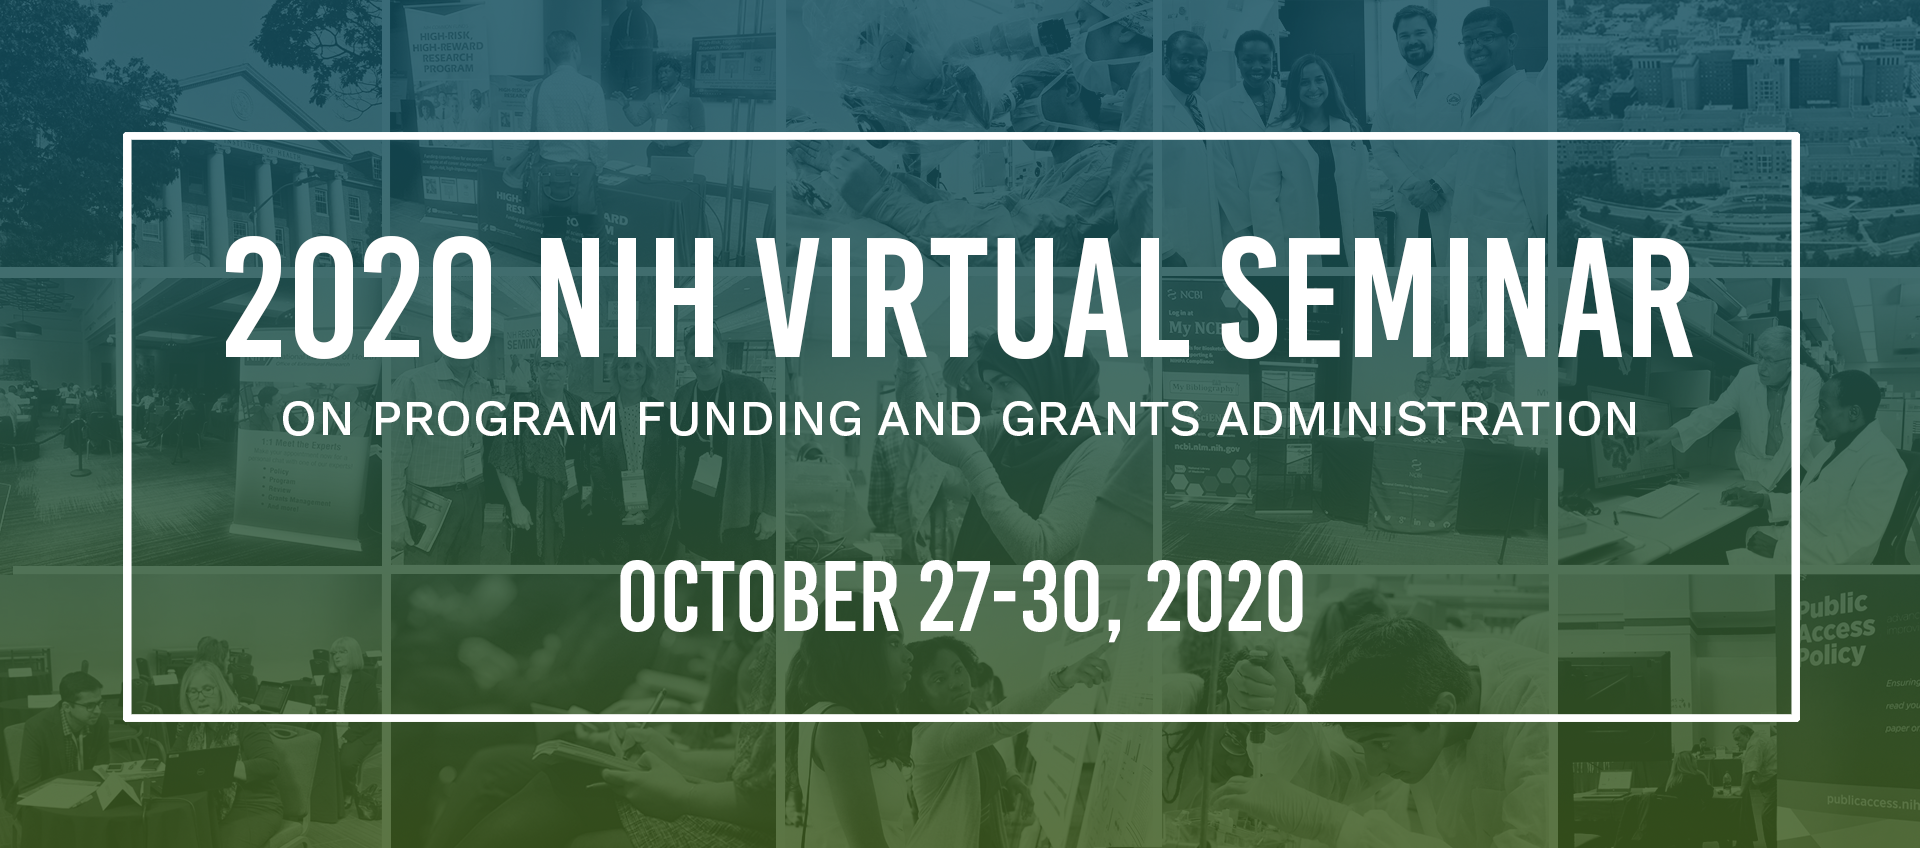 NIH Virtual Seminar on Program Funding and Grants Administration